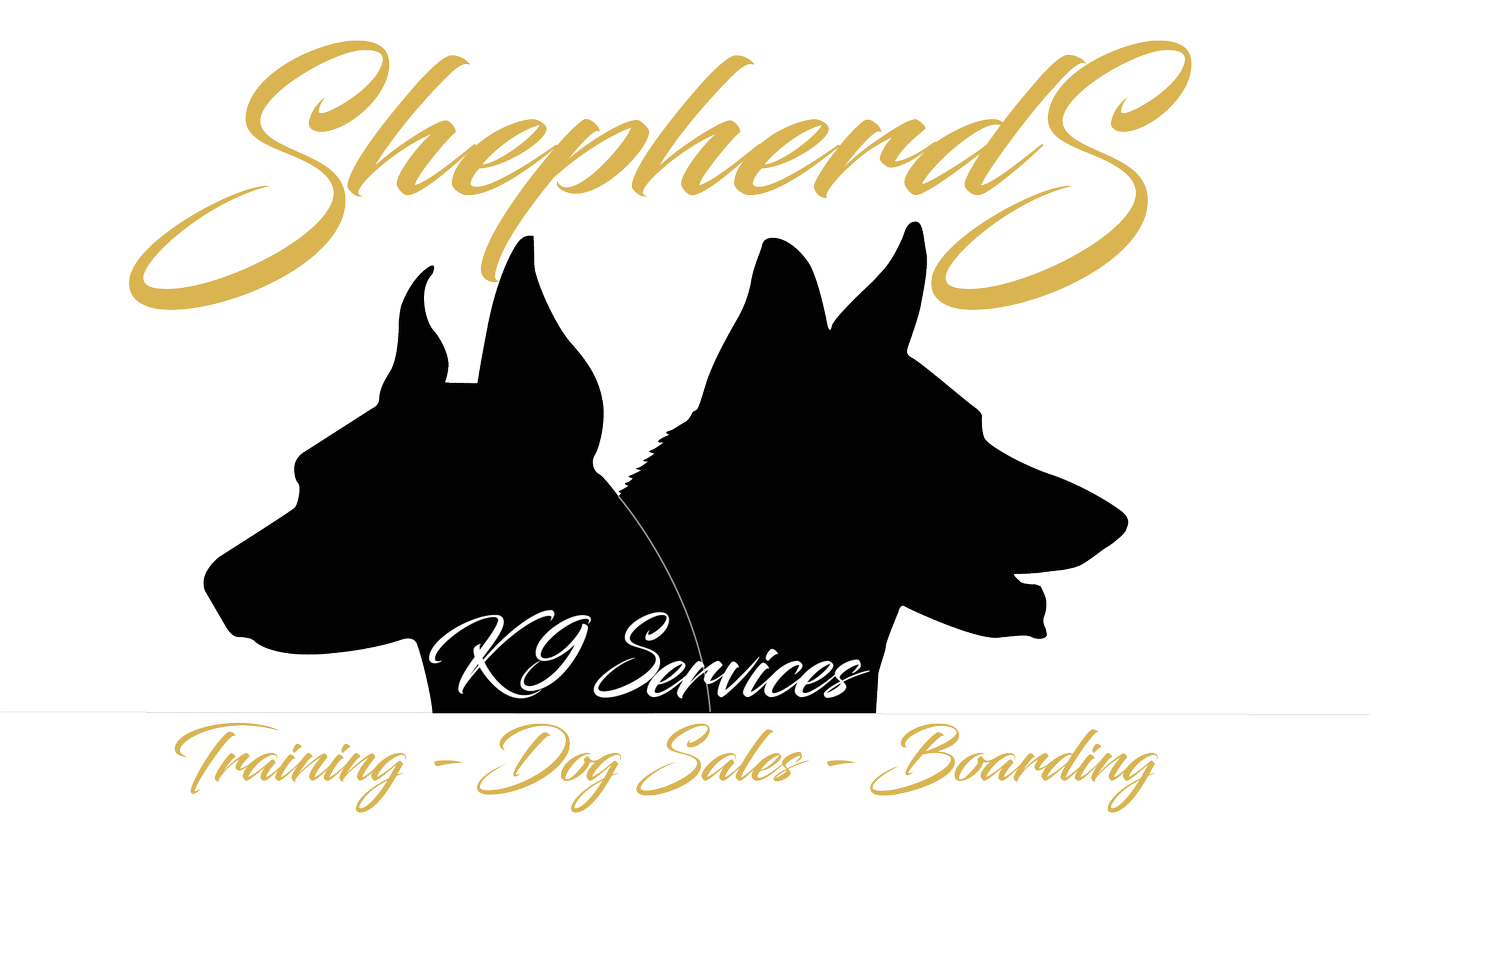  Shepherds K9 Services